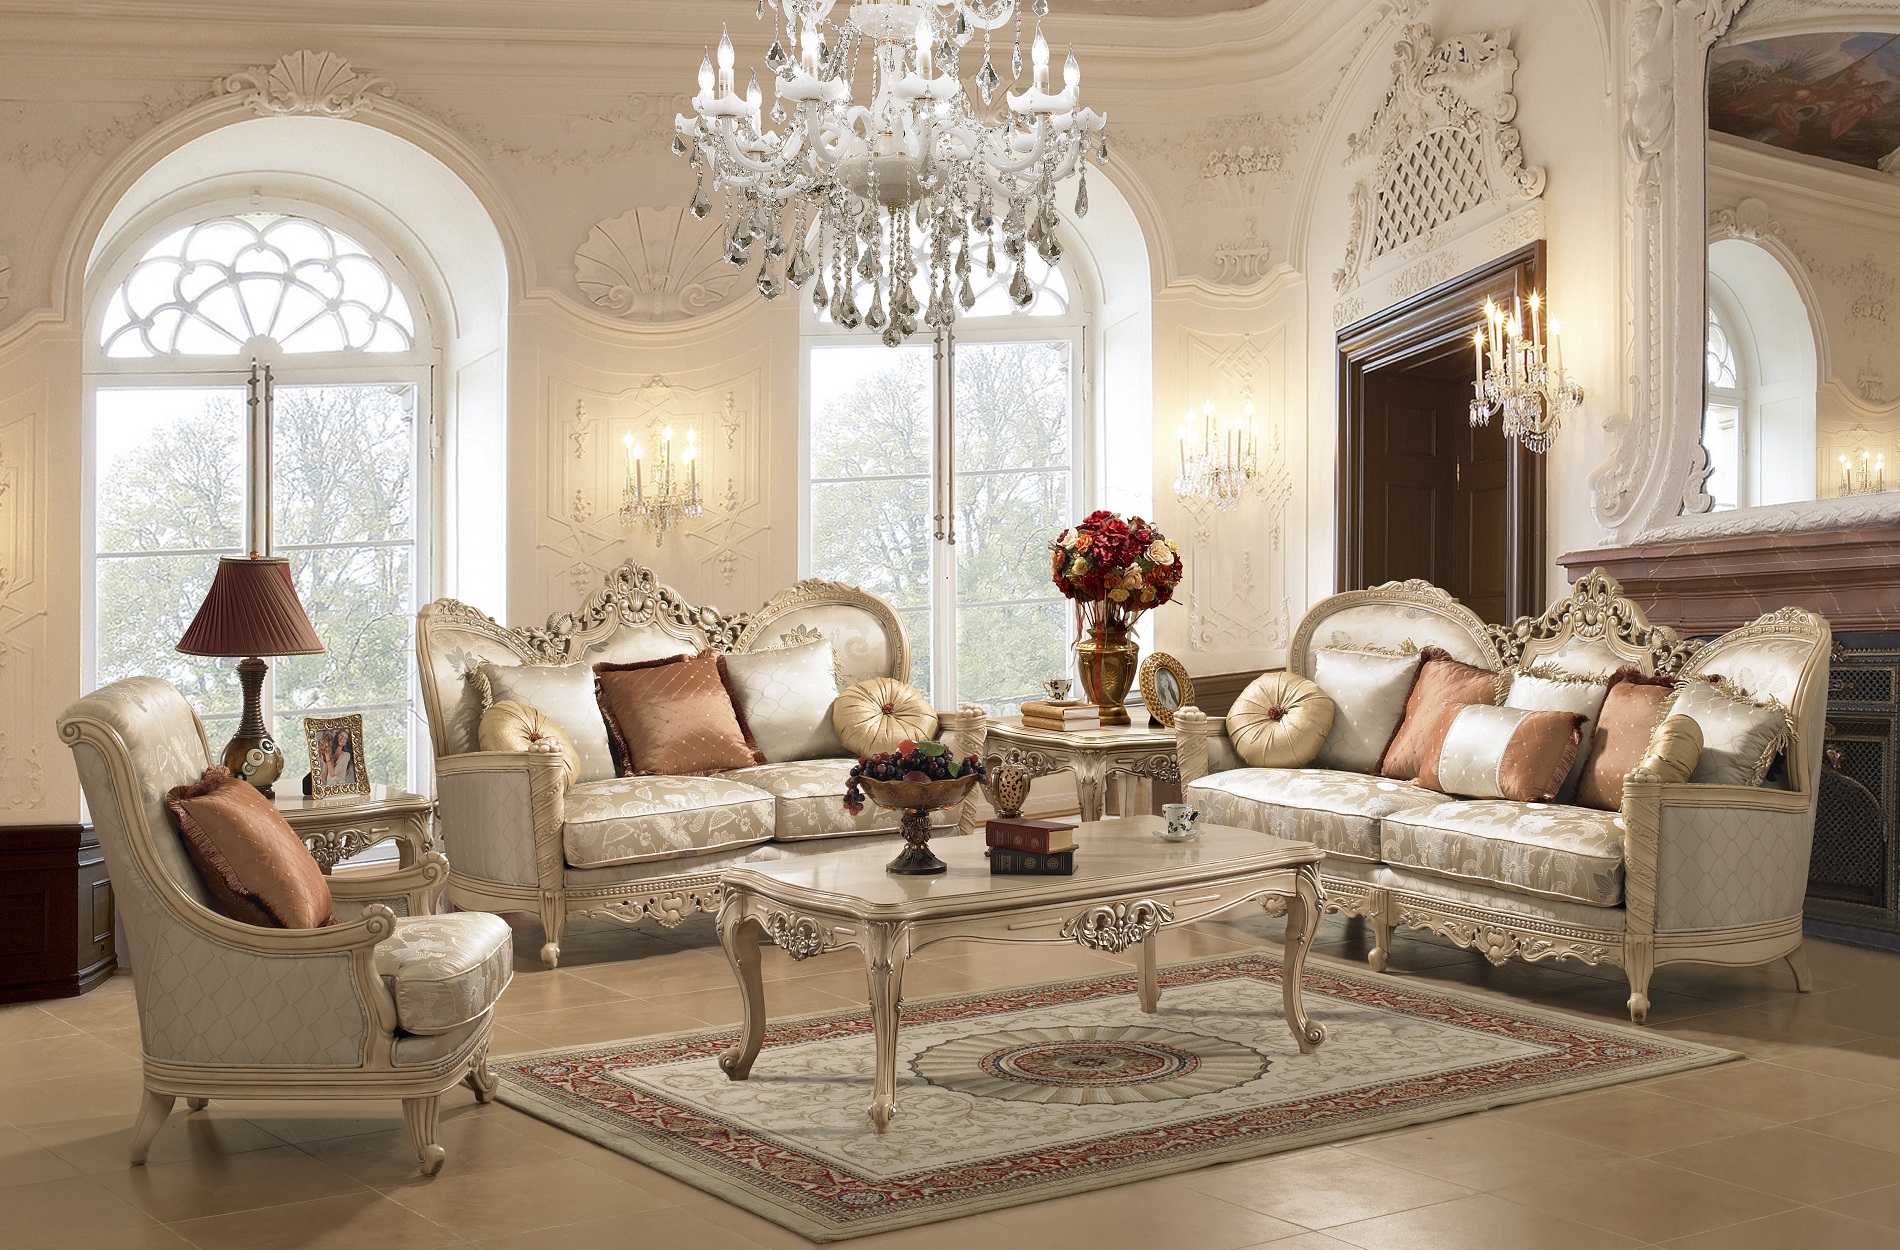 Elegant Living Room Ideas | Fotolip.com Rich image and ...